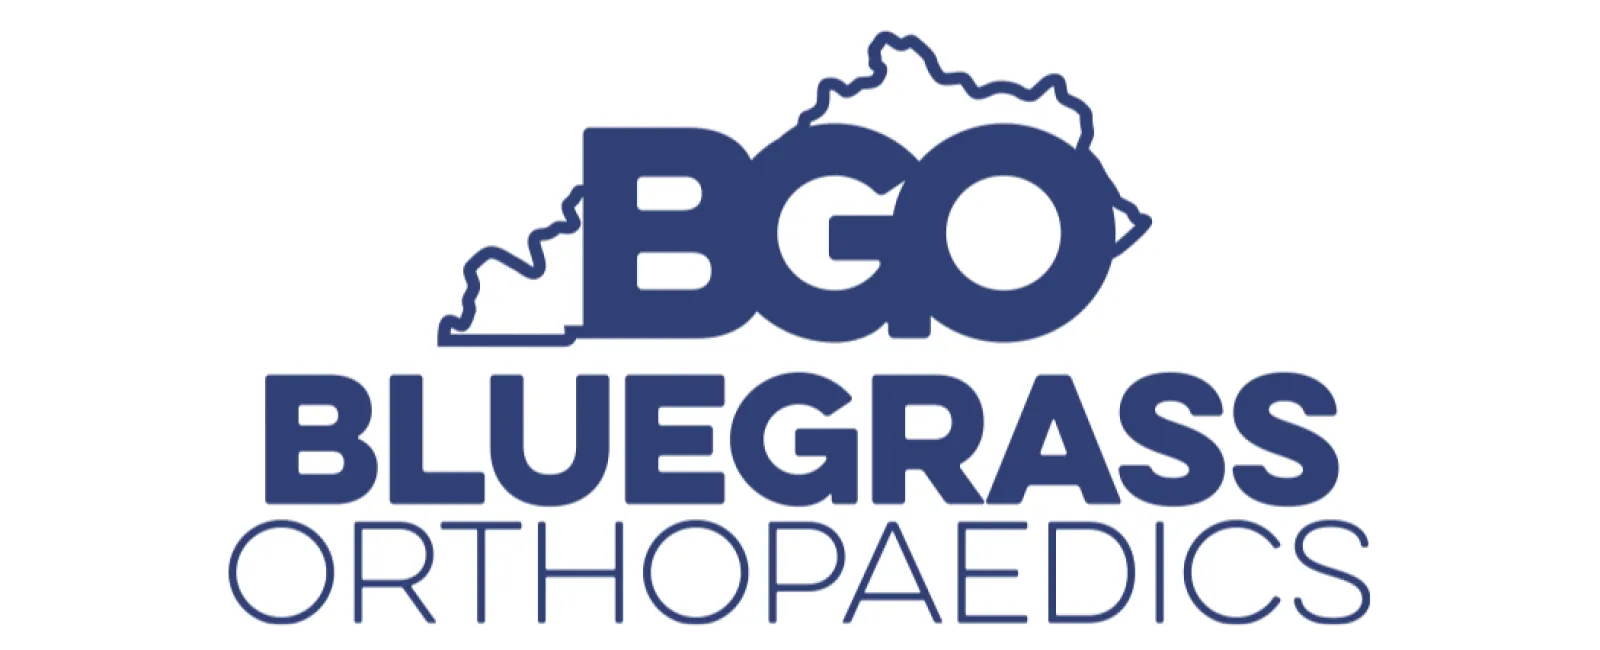 Bluegrass Orthopaedics logo